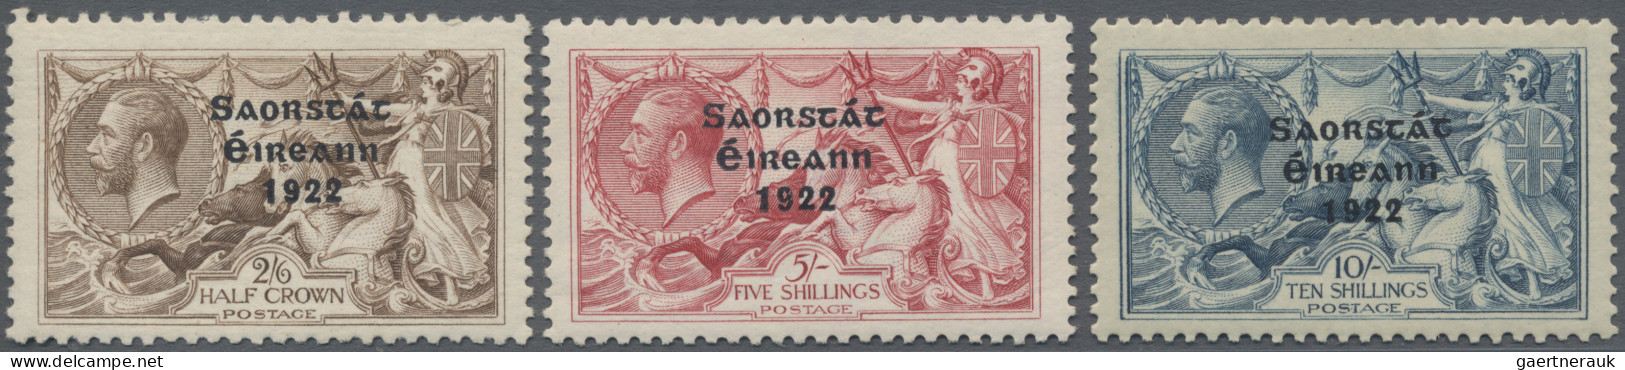 Ireland: 1922, "Saorstat" Overprints, Thom Printing, Wide Year Date, 2s.6d. Choc - Unused Stamps